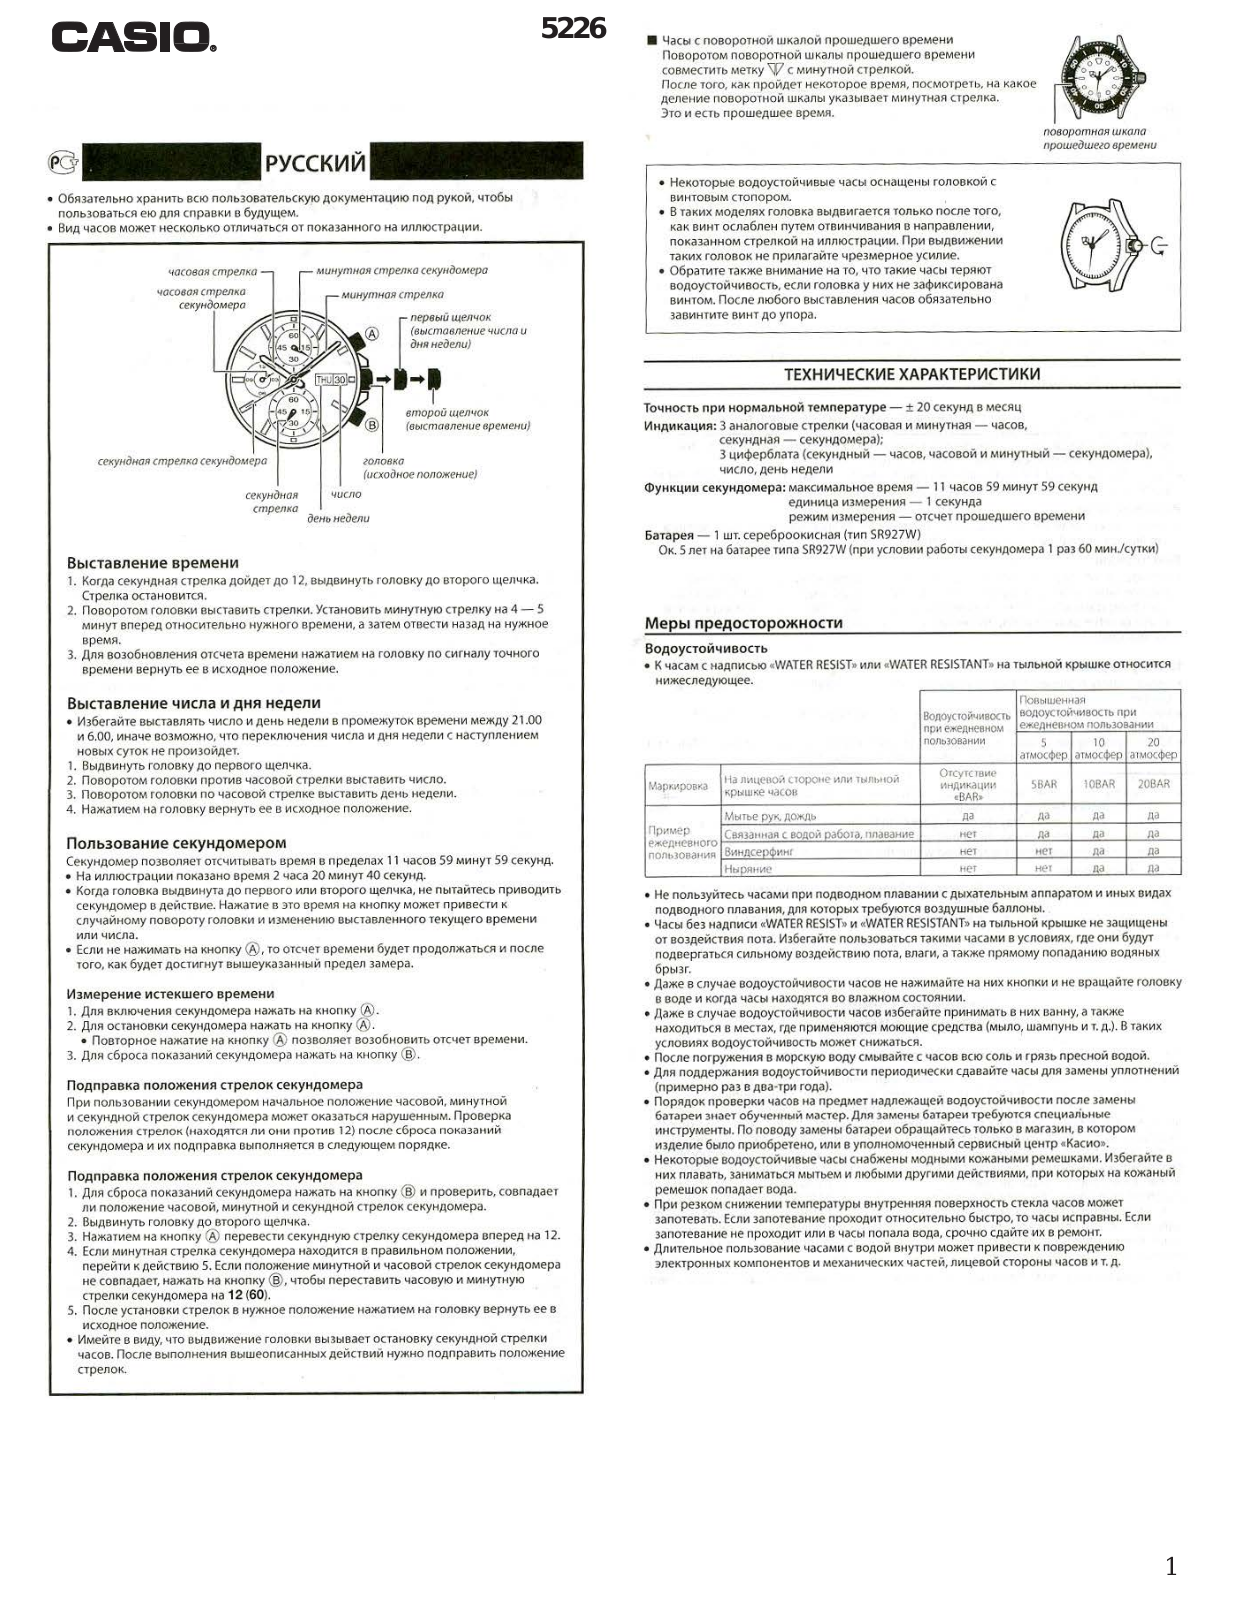 Casio EFR-502D-1A User Manual